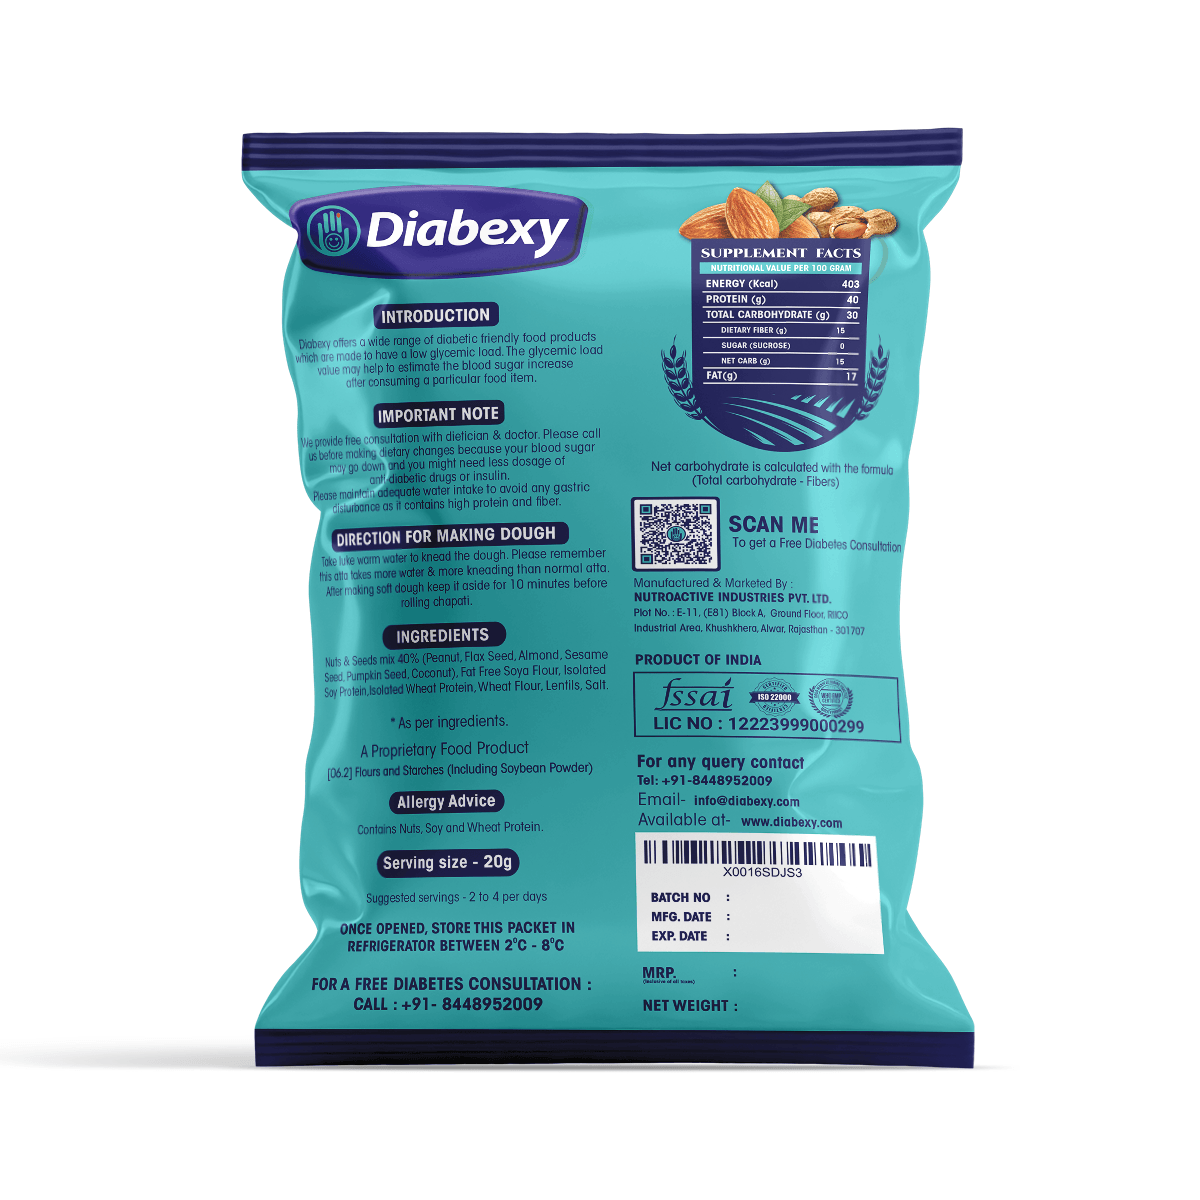 Diabexy Atta for Sugar Control - Diabexy